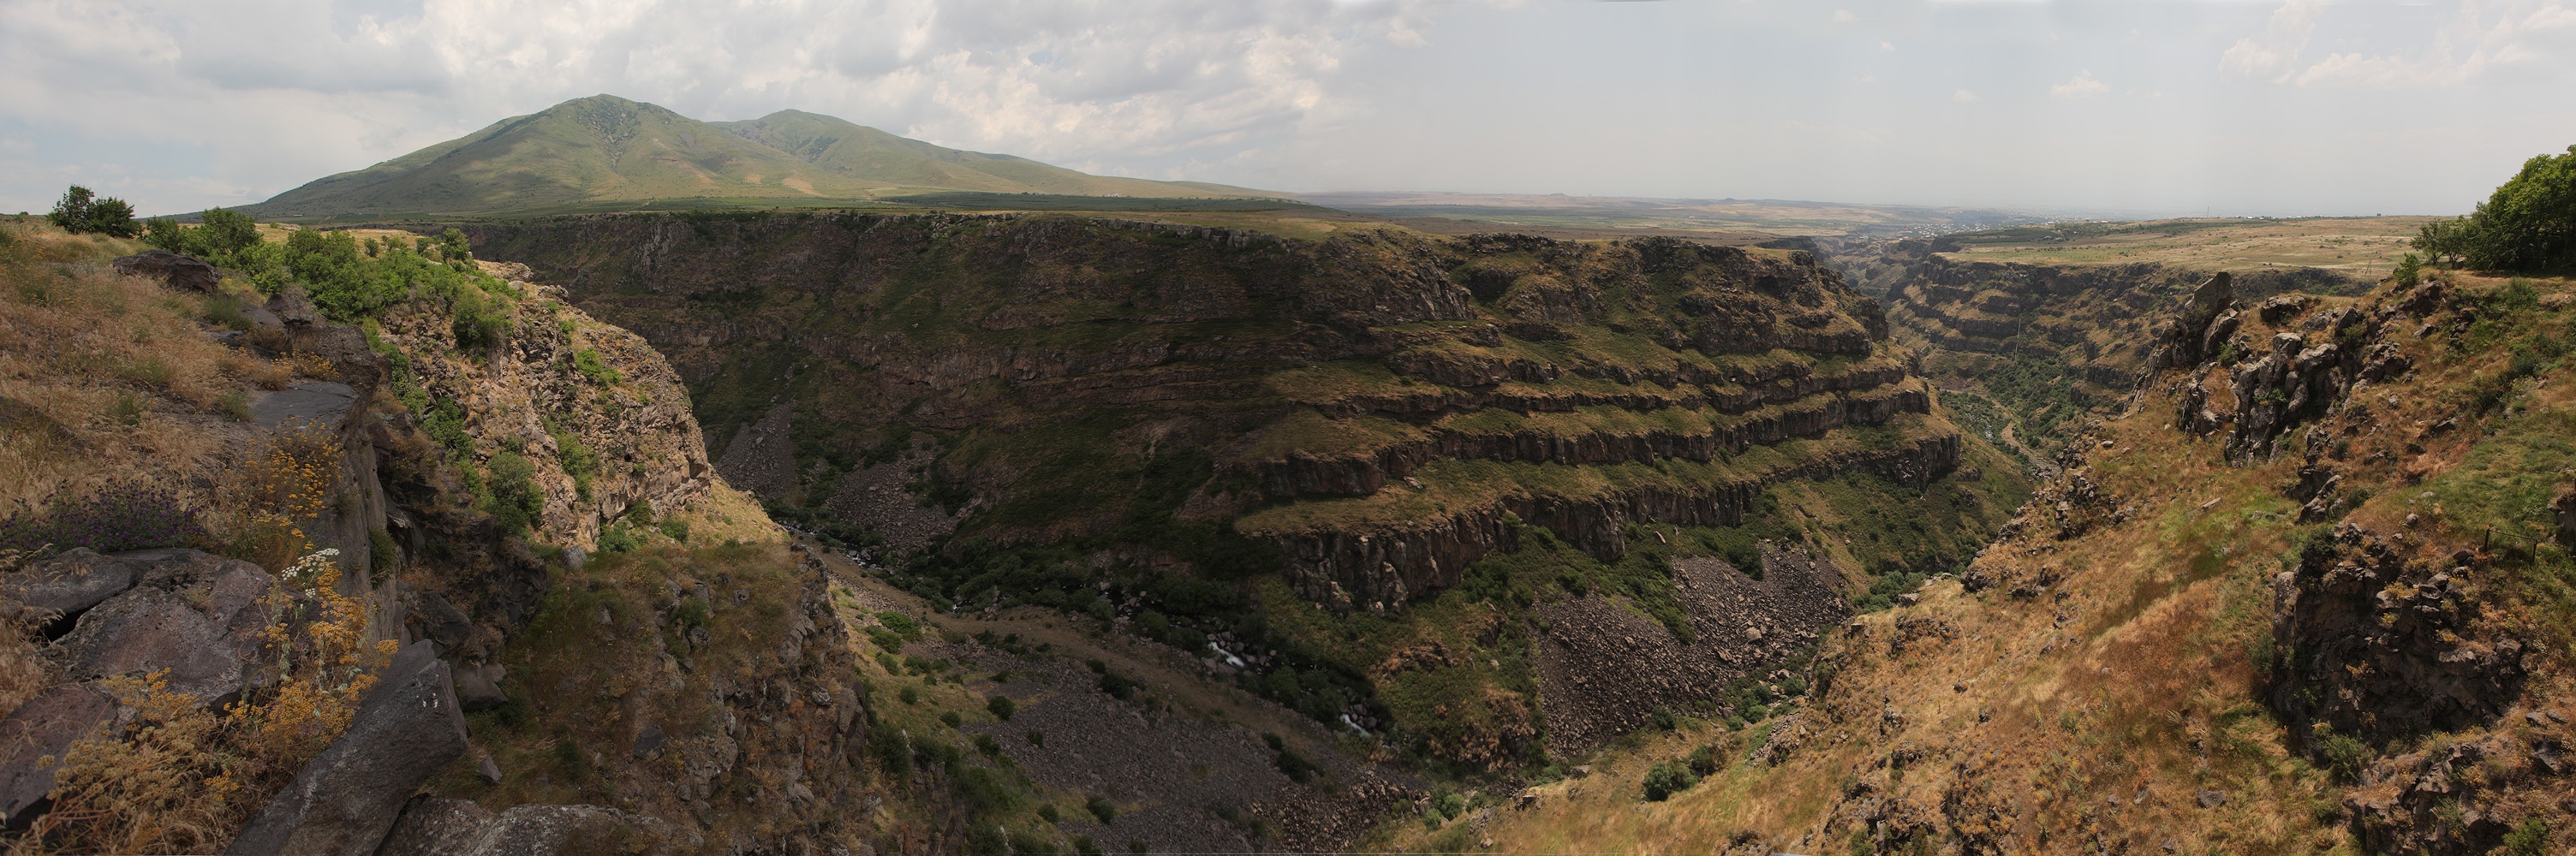 bill-hocker-gorge-at--seghmosvank-armenia-2013